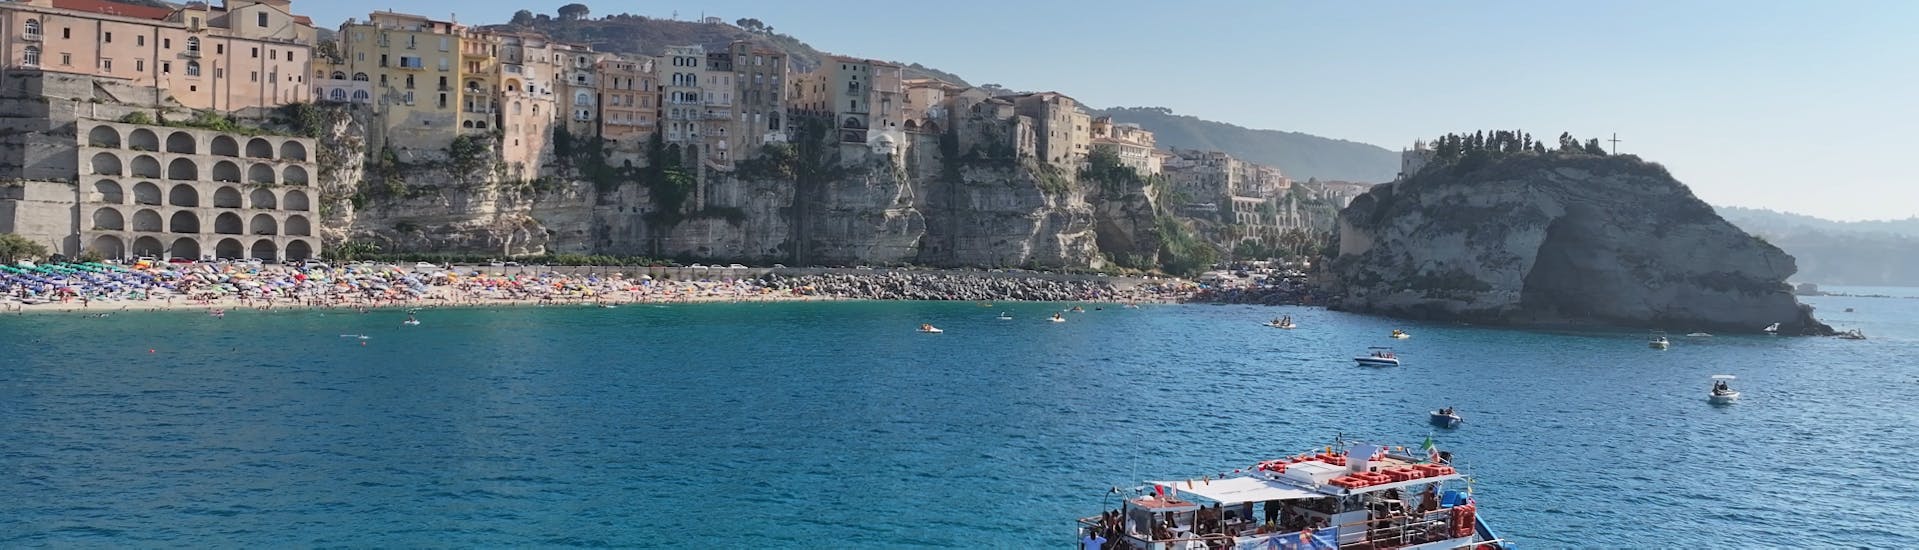 Boottocht van Tropea naar Costa degli Dei  & zwemmen.